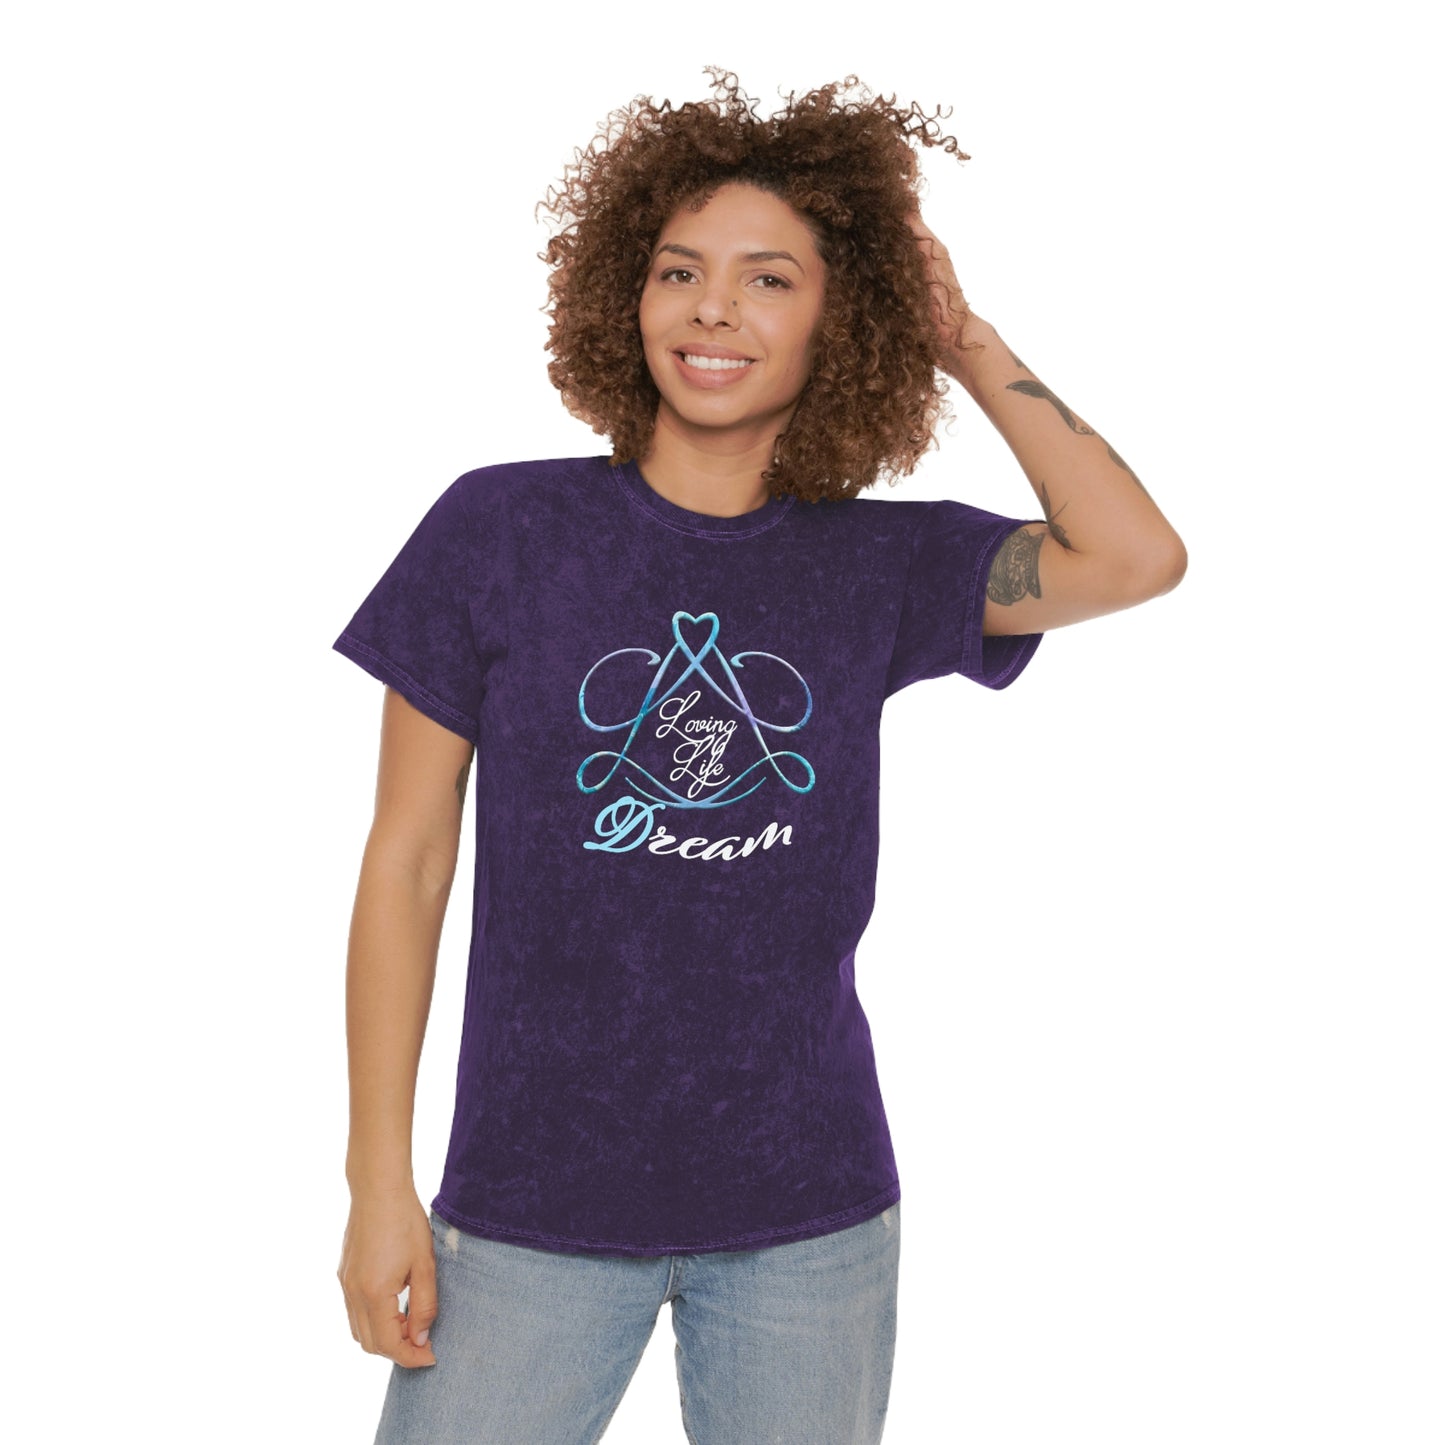 Unisex Mineral Wash T-Shirt - LL/Dream